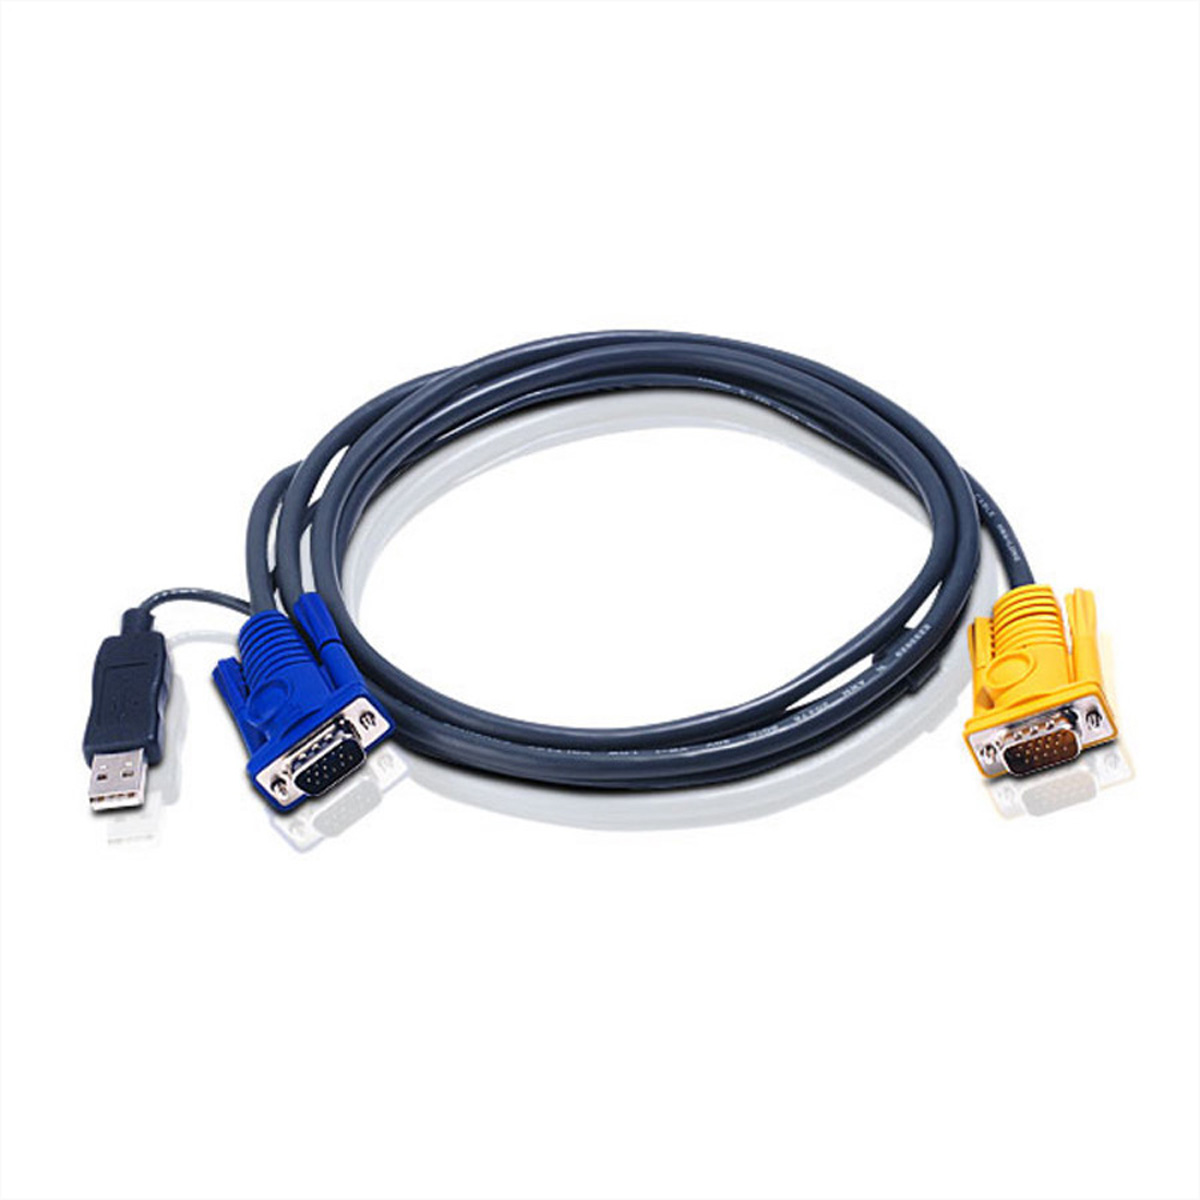 ATEN 2L-5206UP KVM-Kabel VGA USB (mit eingebautem PS/2-USB-Konverter), schwarz,